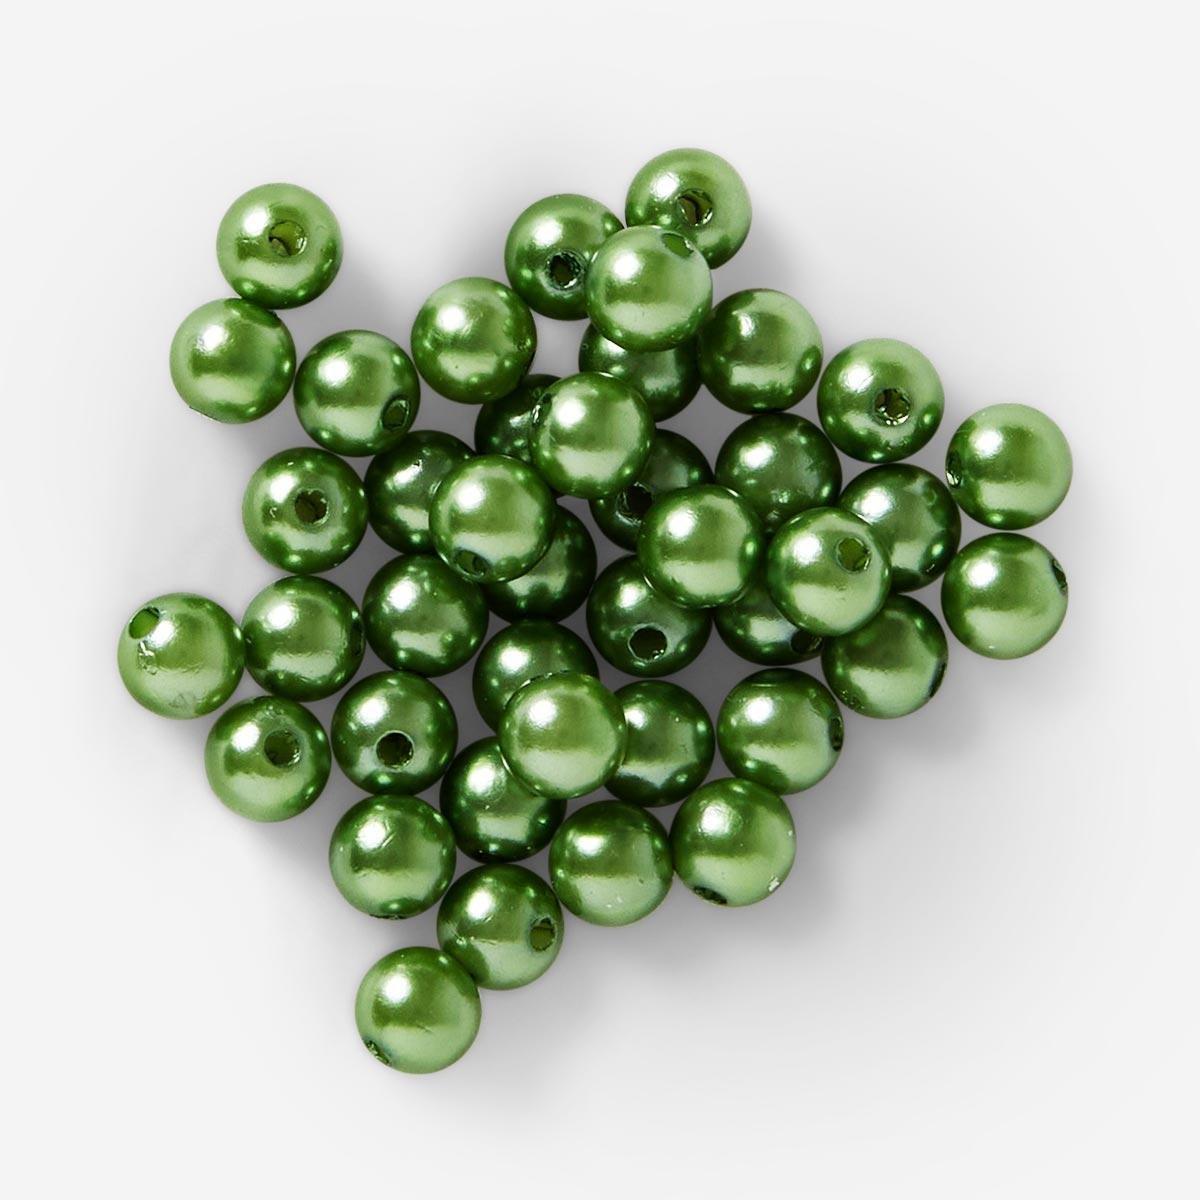 Green plastic beads